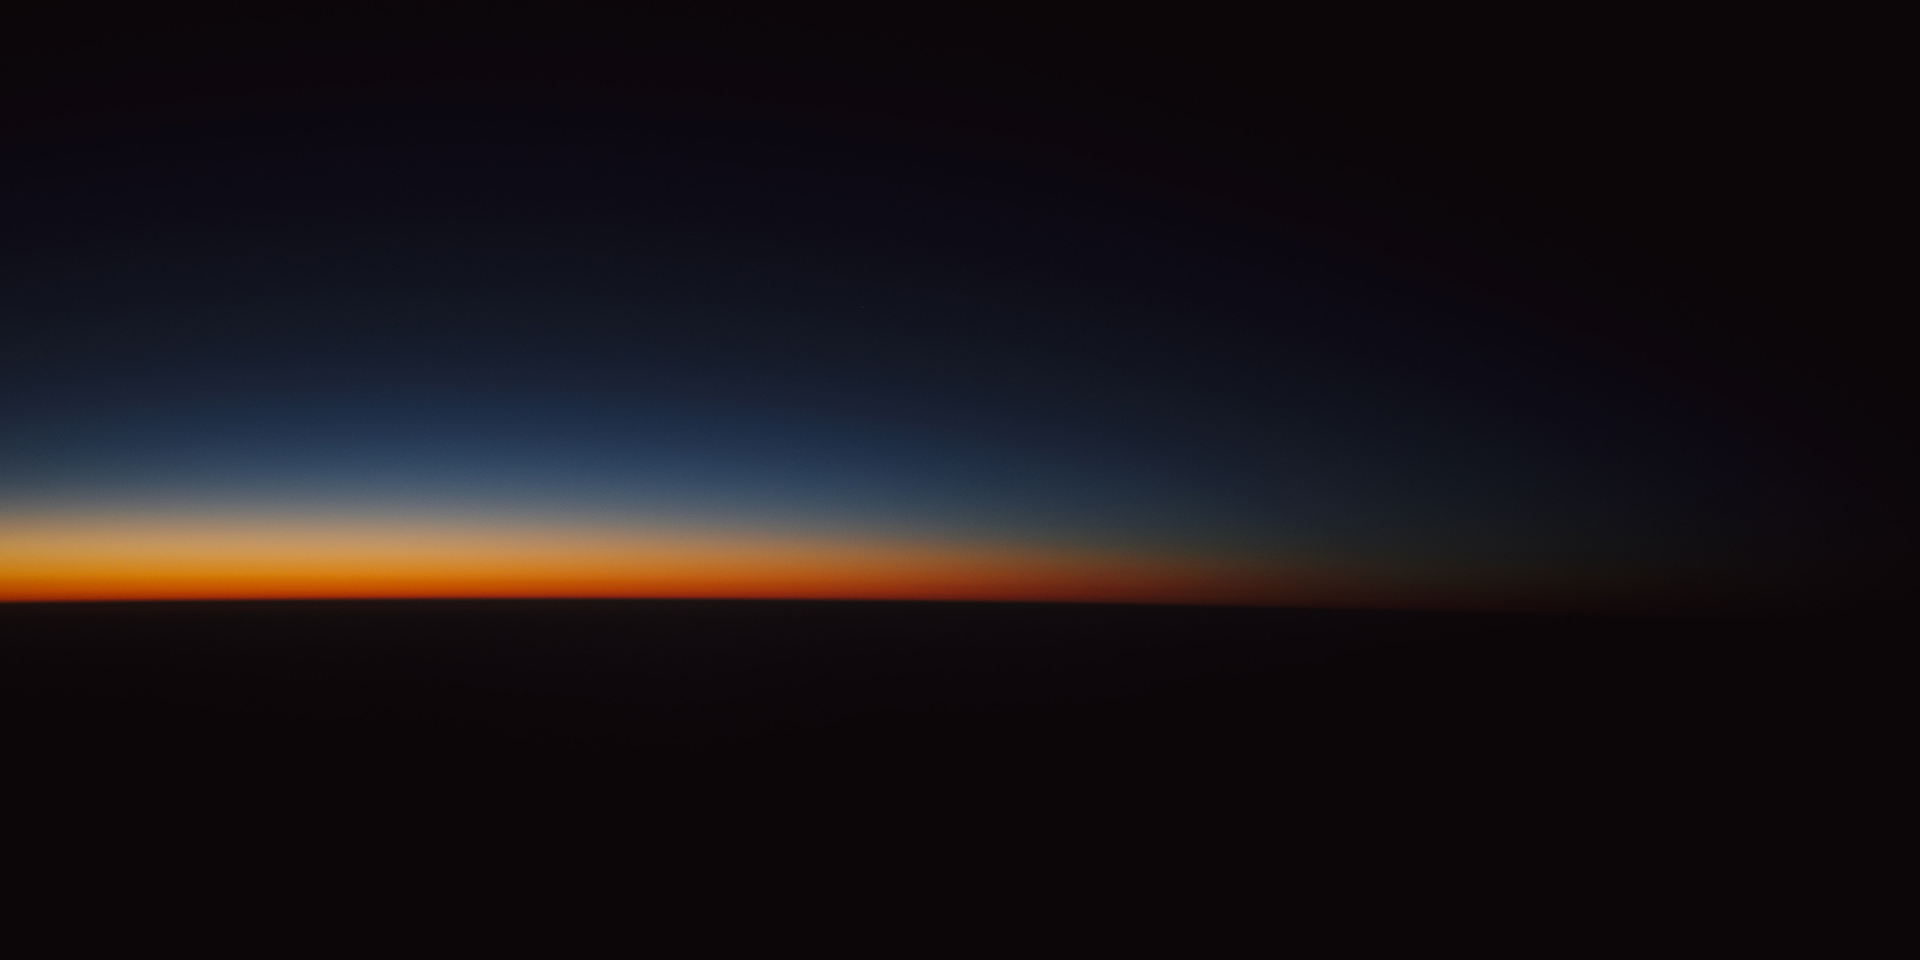 Sonnenaufgang am Horizont